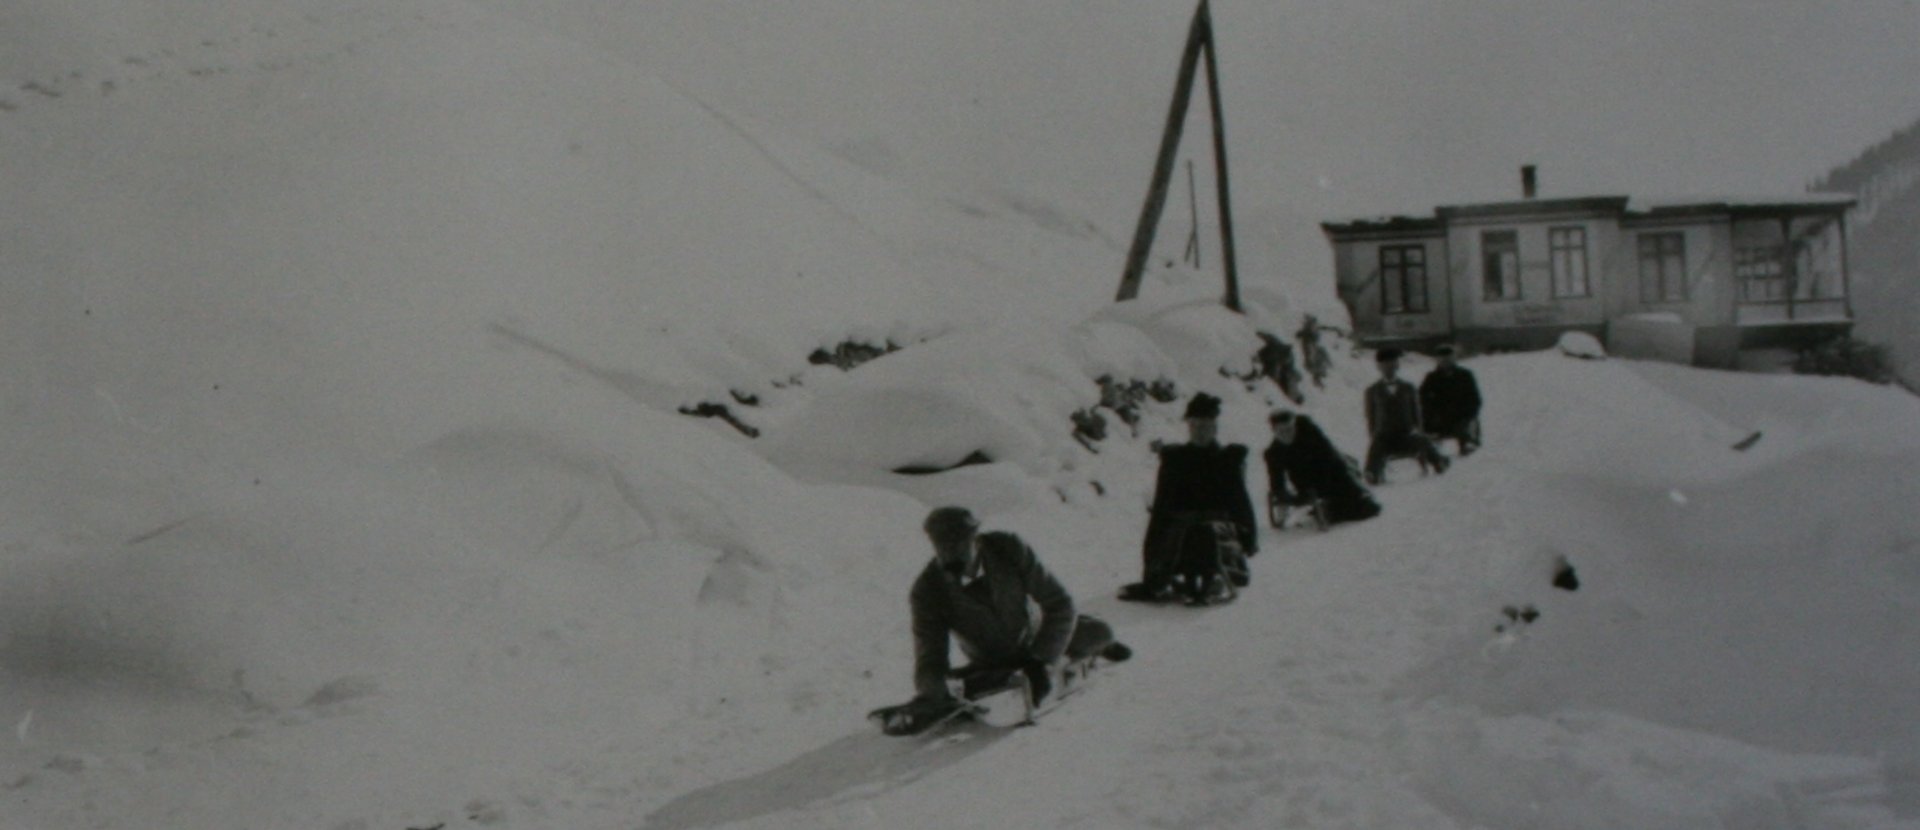 The Davos sledge